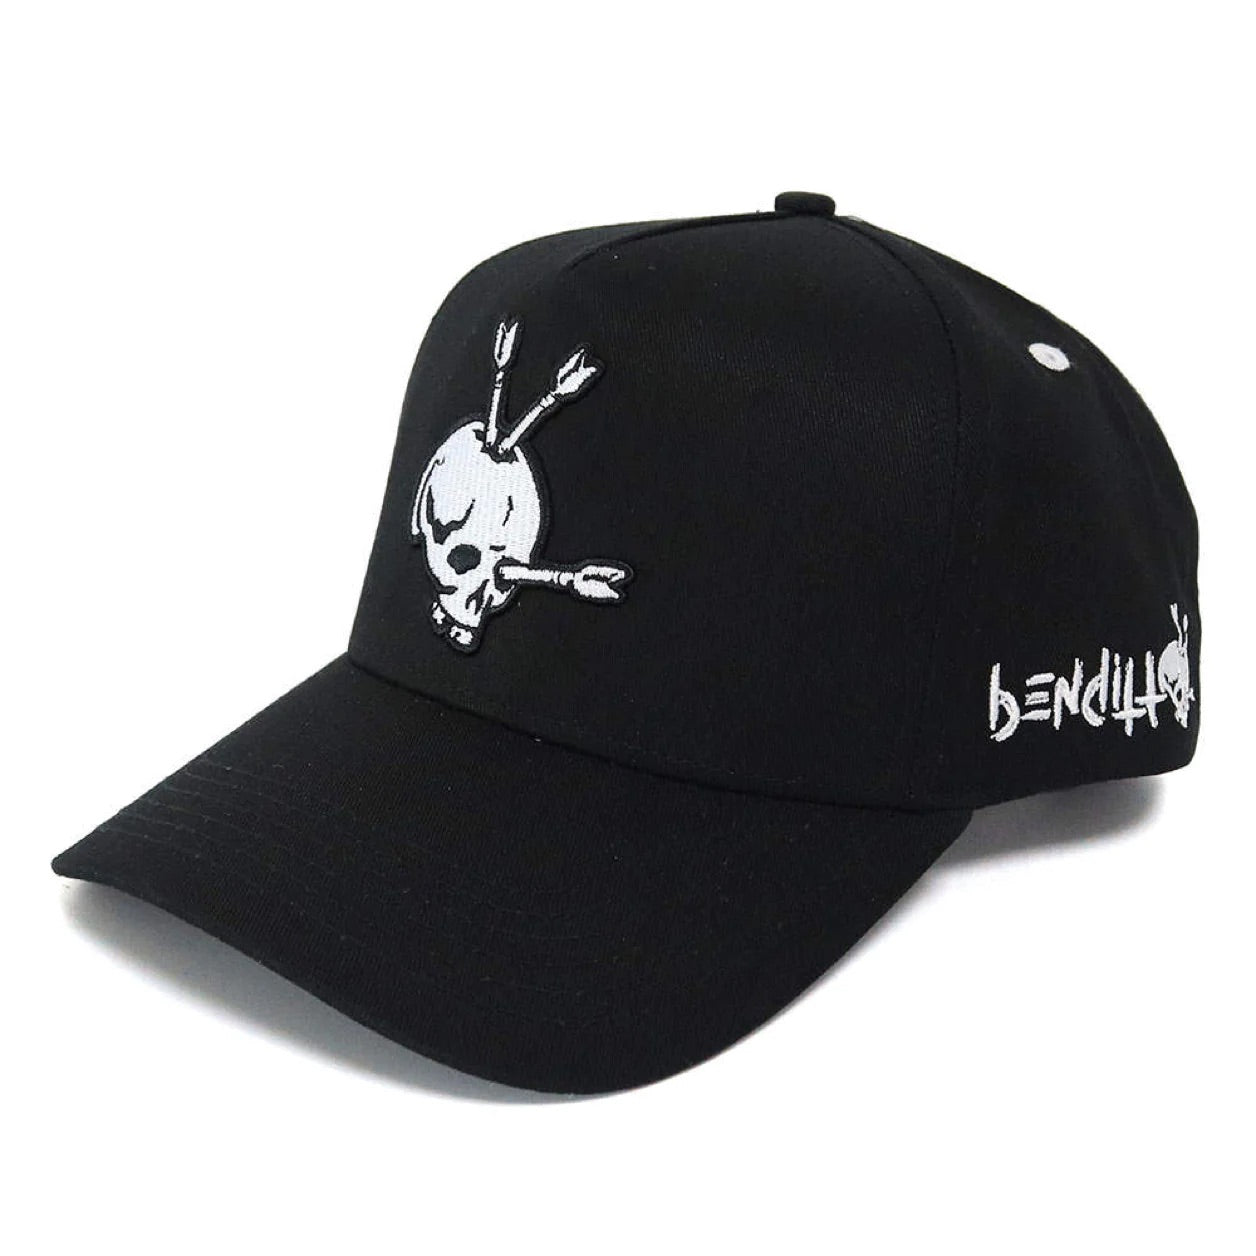 Benditto hat (black)